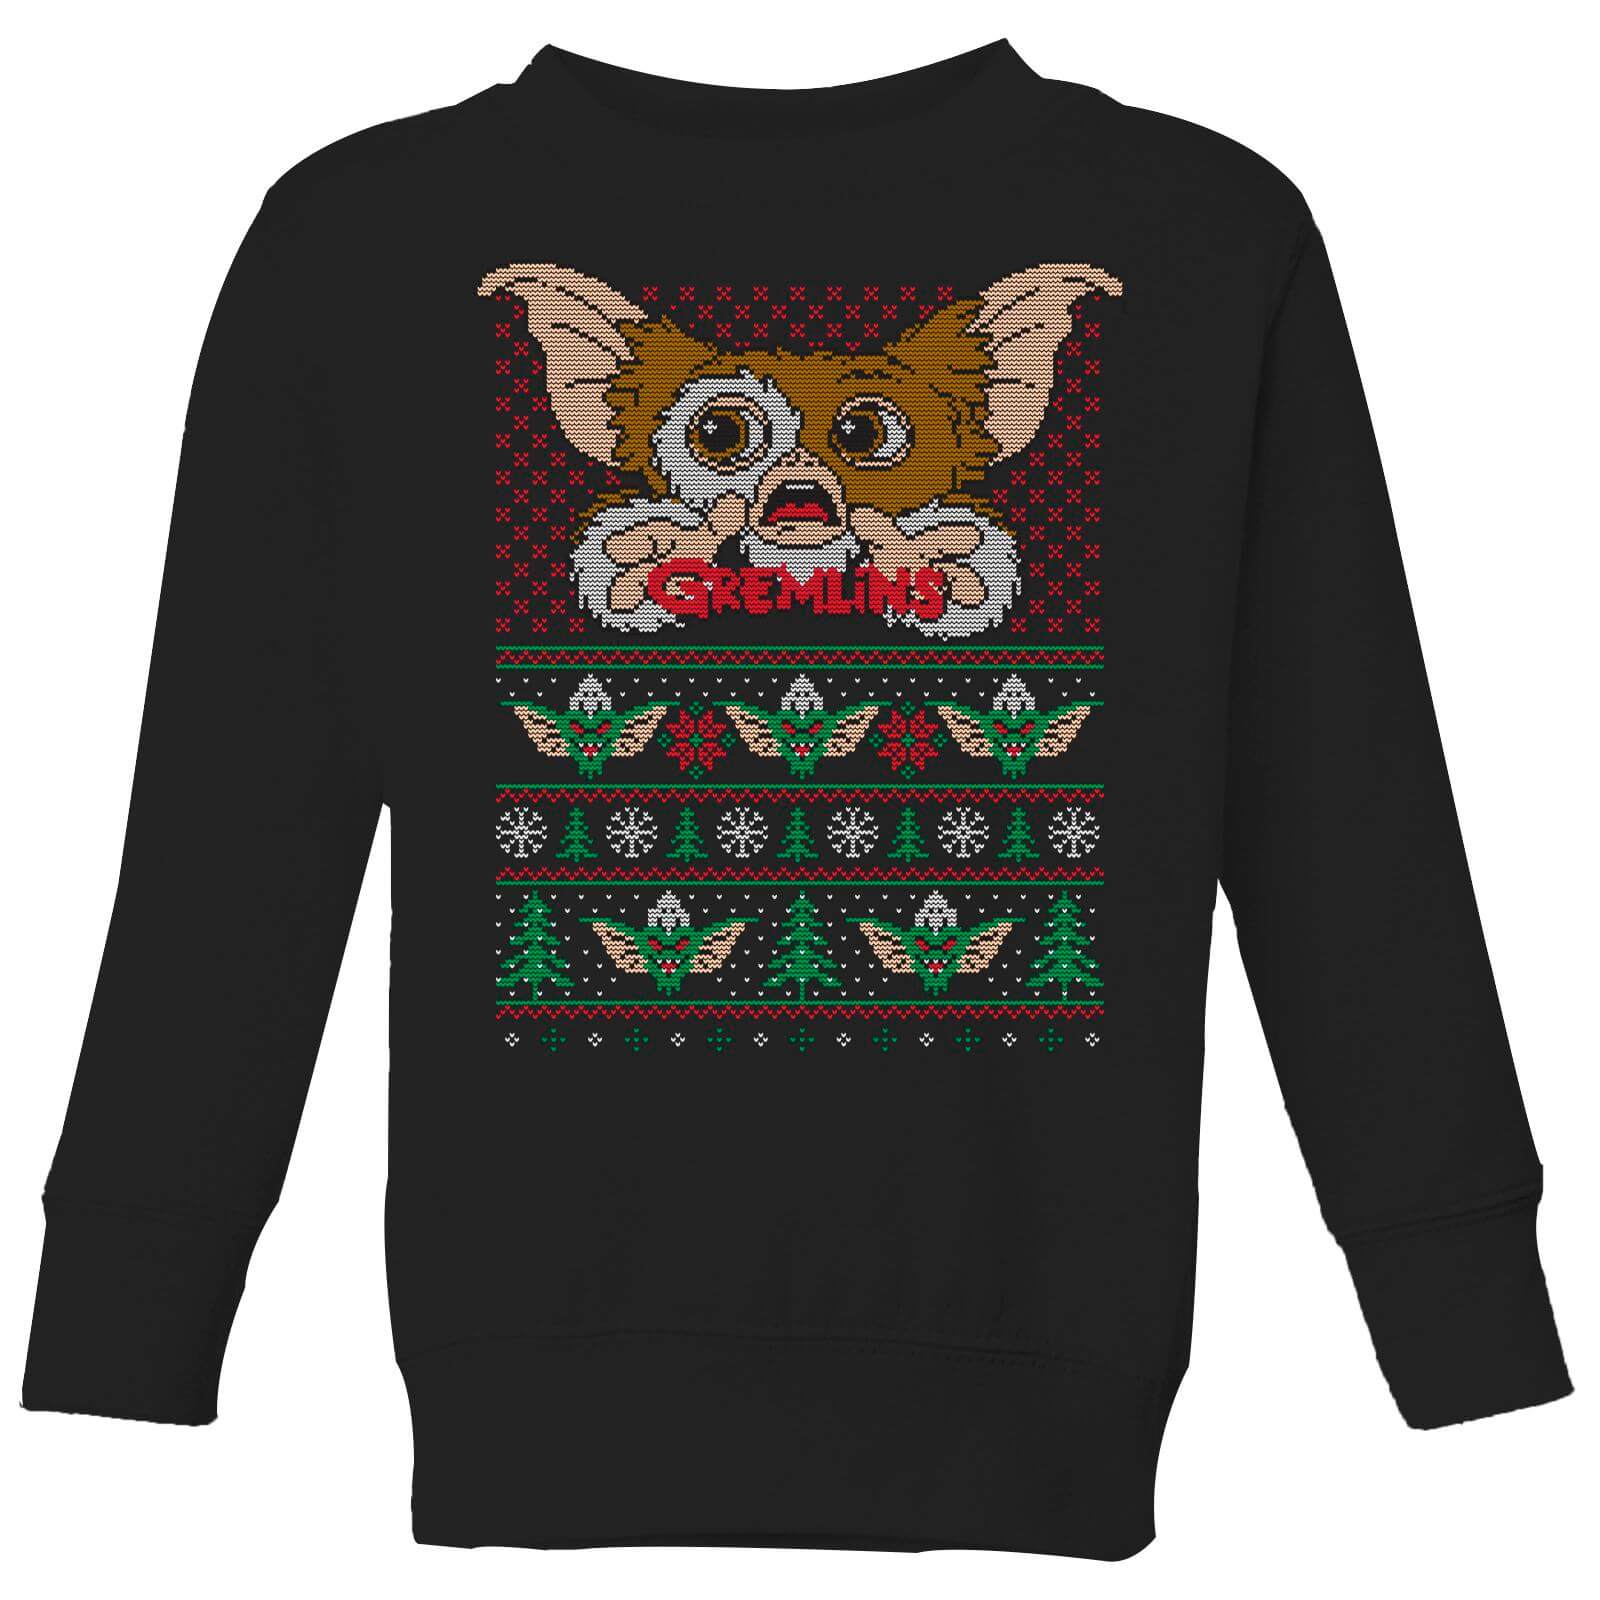 Gremlins Ugly Knit Kids' Christmas Sweatshirt - Black - 7-8 años - Negro